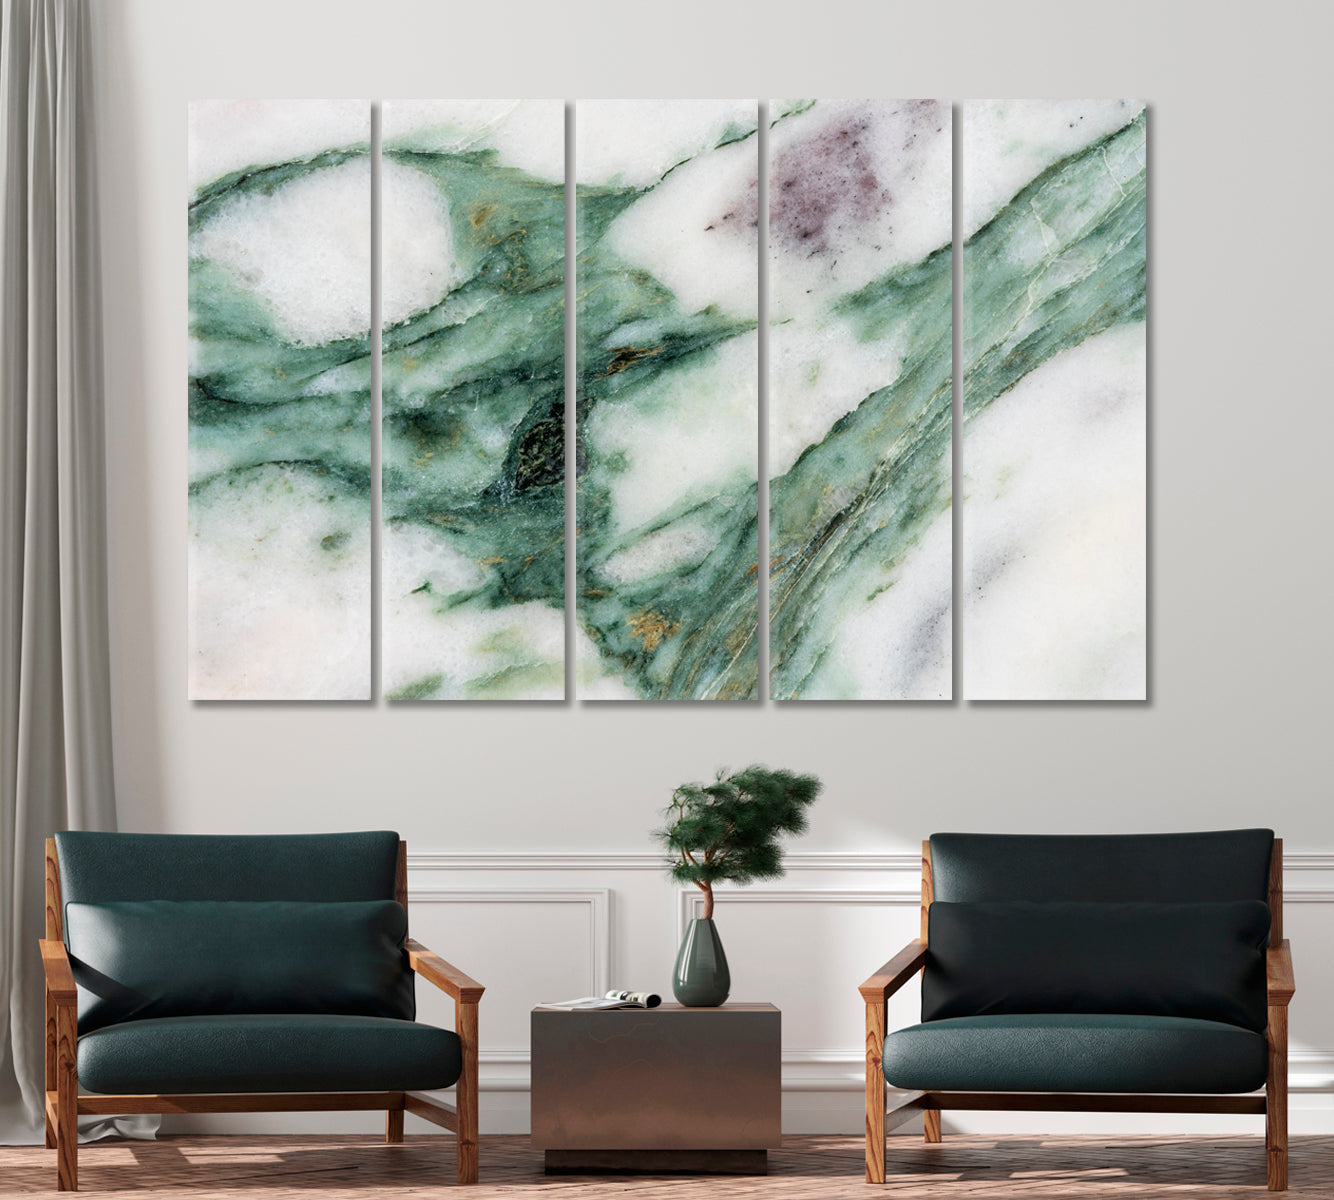 Deep Green Veins on White Marble Canvas Print-Canvas Print-CetArt-1 Panel-24x16 inches-CetArt